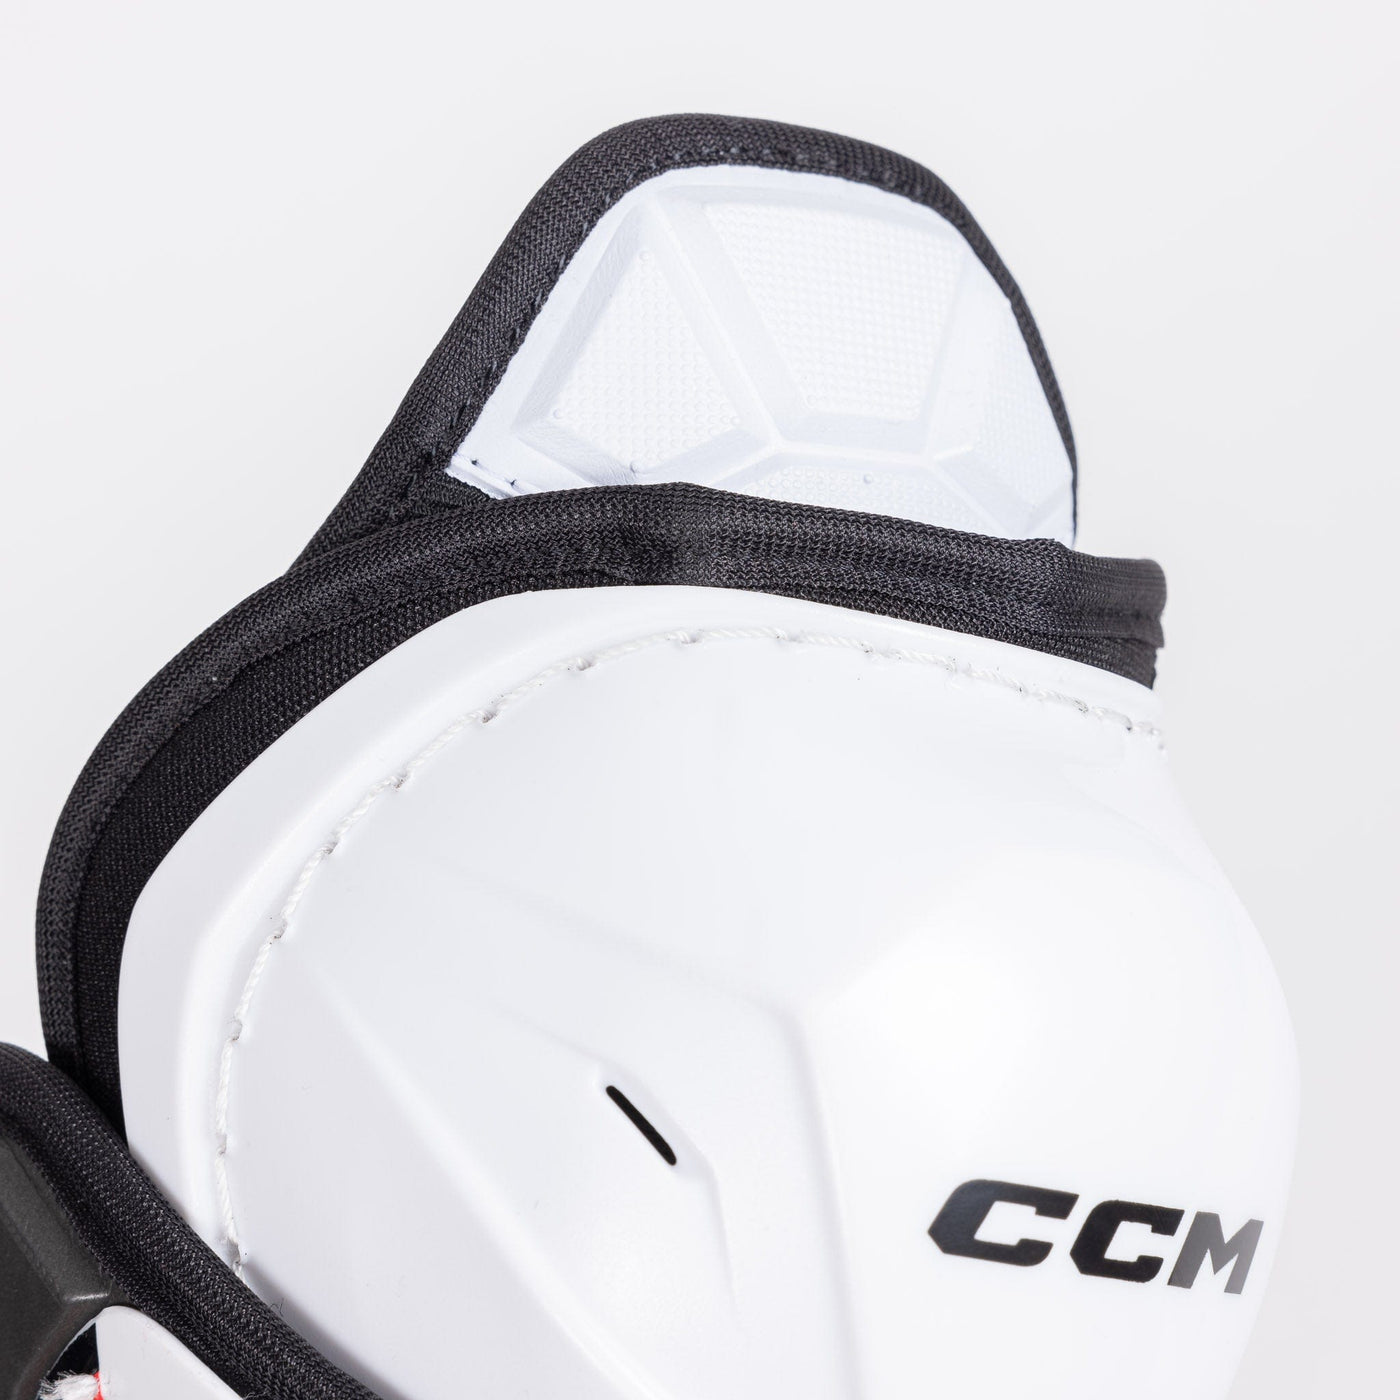 CCM Jetspeed Control Junior Hockey Shin Guards - The Hockey Shop Source For Sports